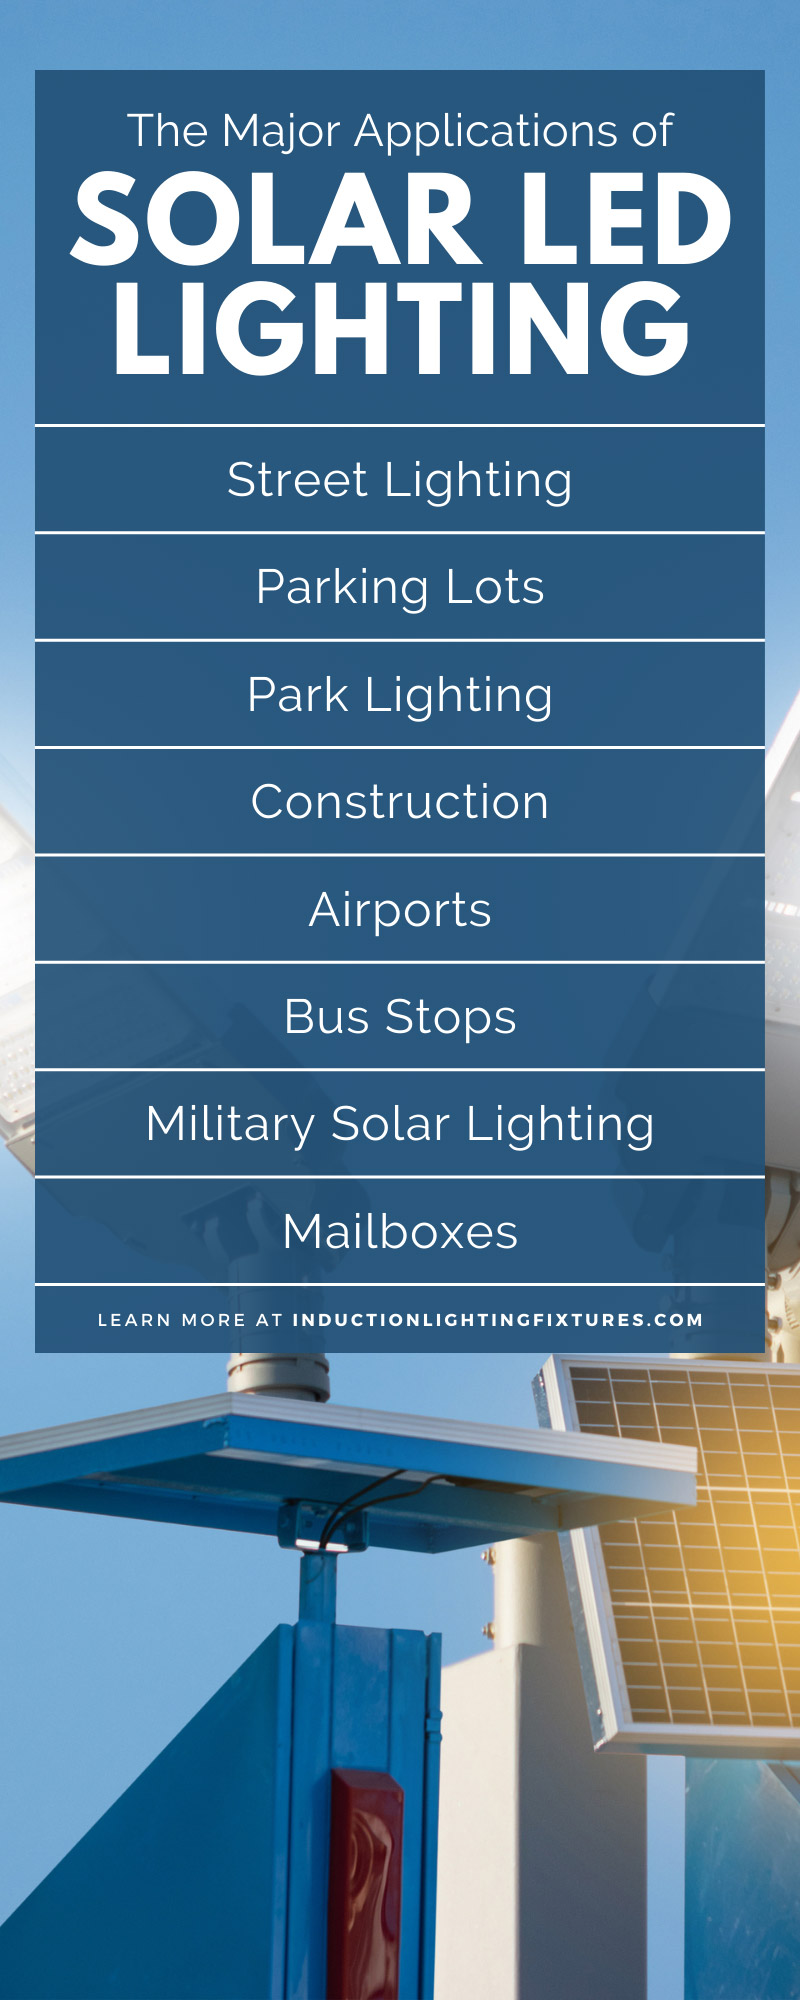 The Major Applications of Solar LED Lighting